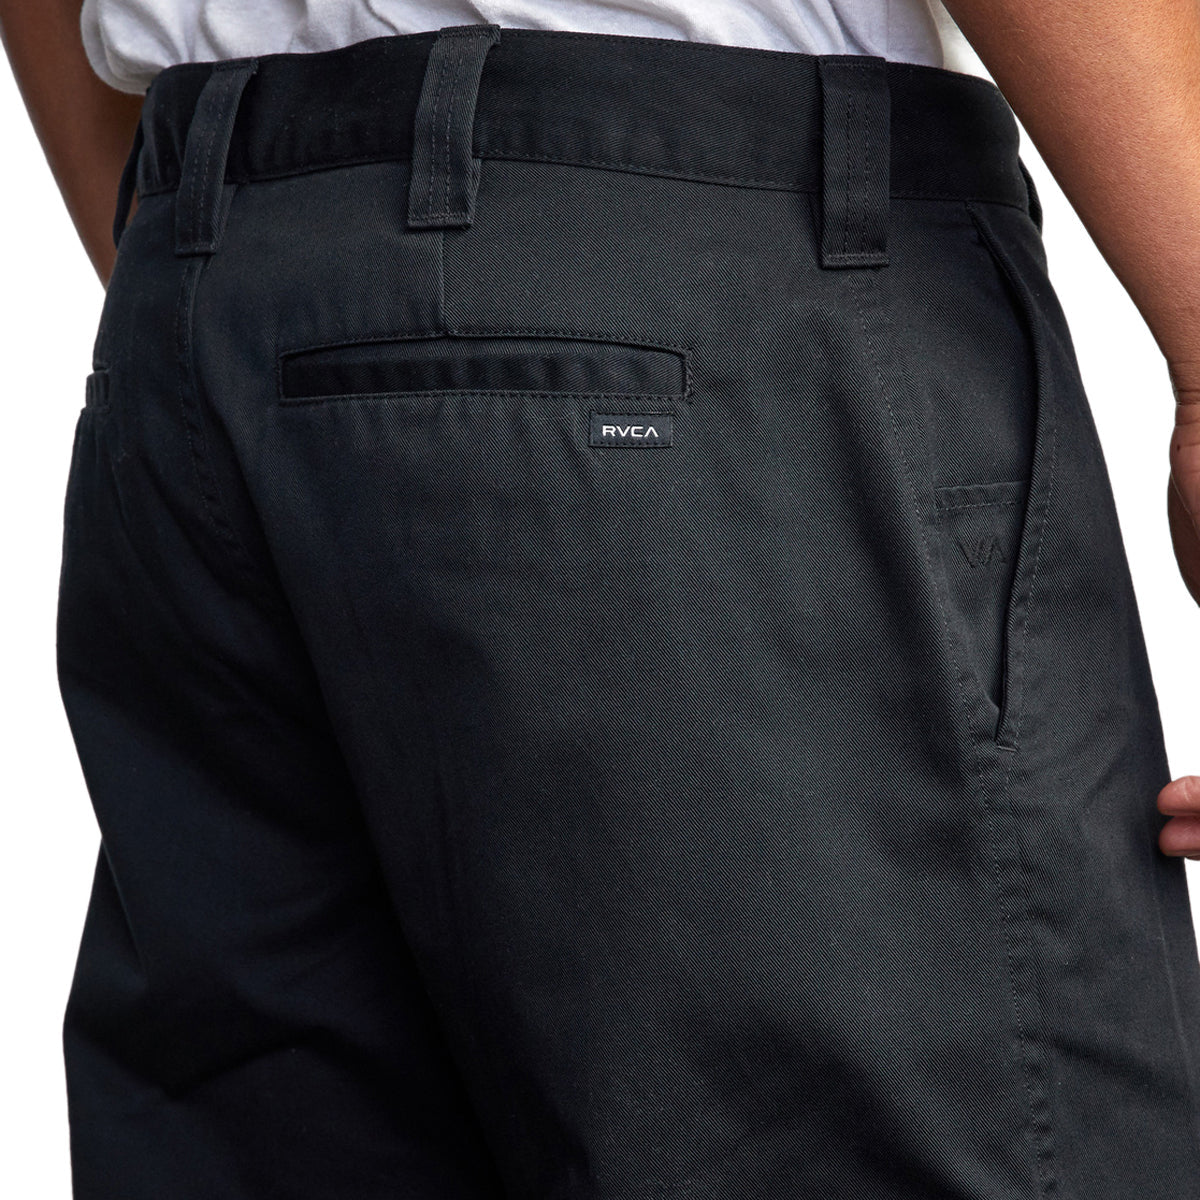 RVCA Americana Chino Pants - Black image 4